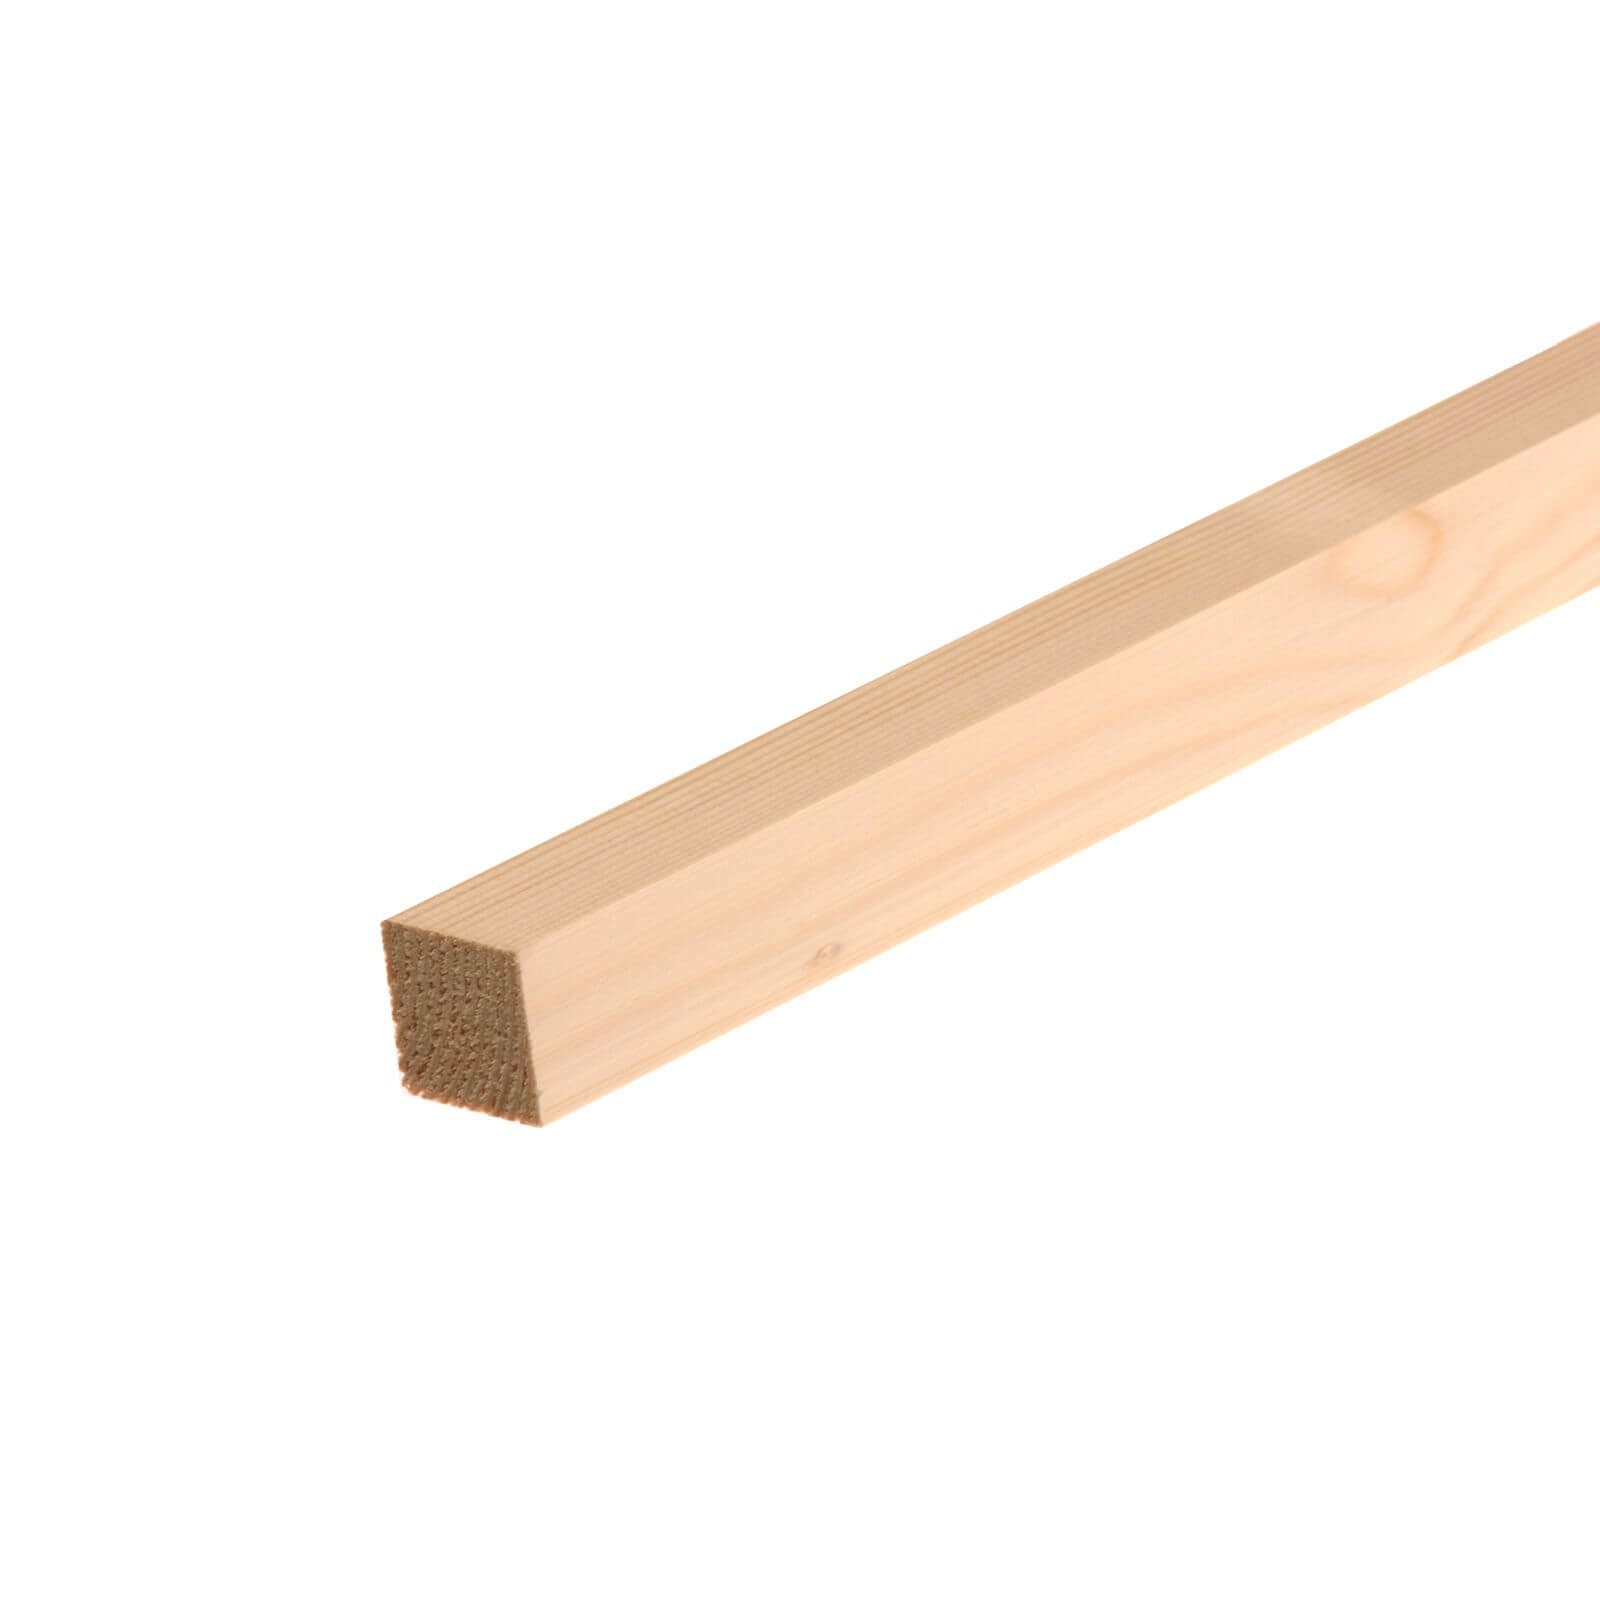 Metsa Planed Square Edge Stick Softwood Timber 1.8m (34 x 34 x 1800mm)